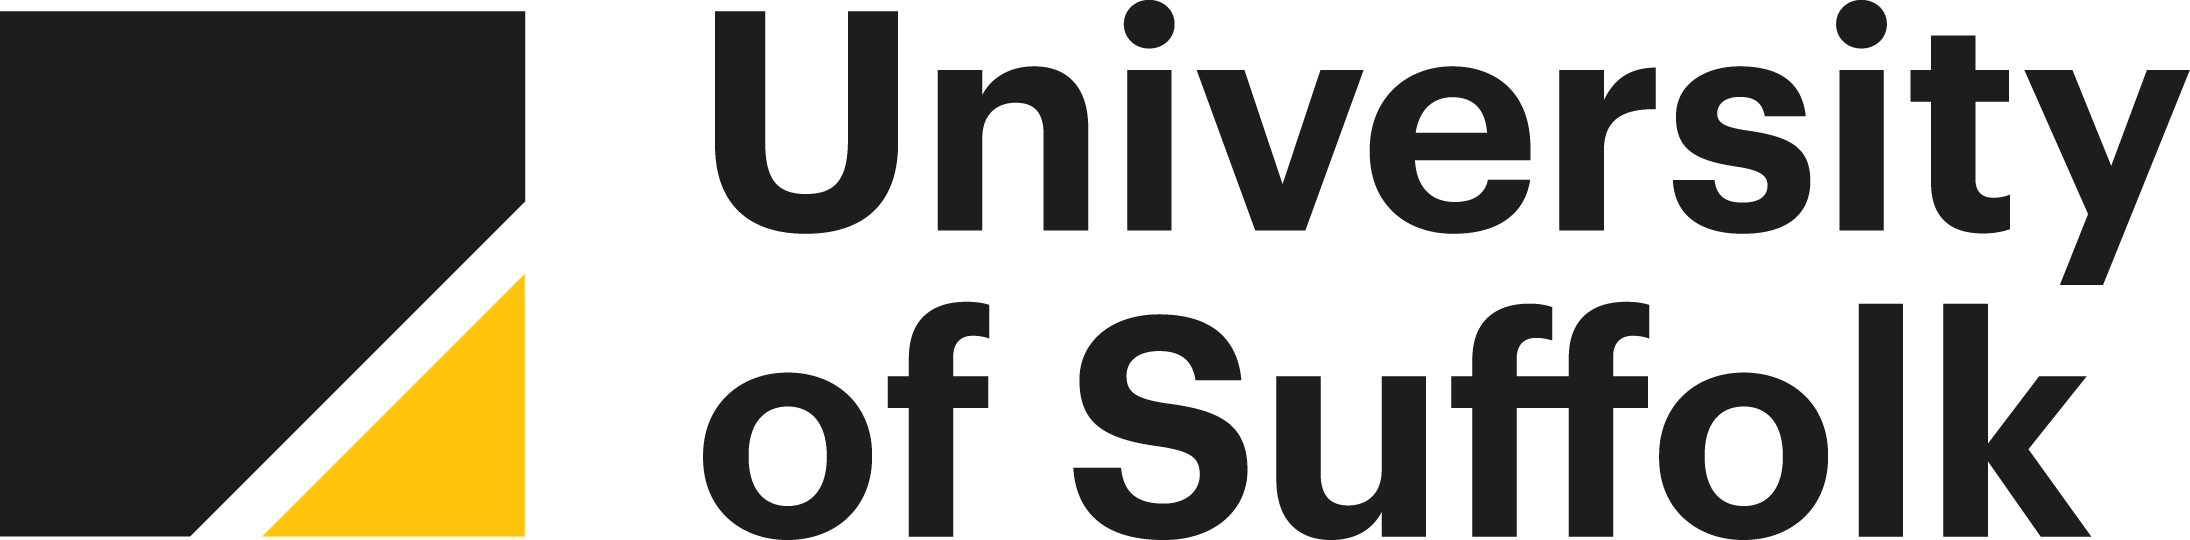 University of Suffolk's logo